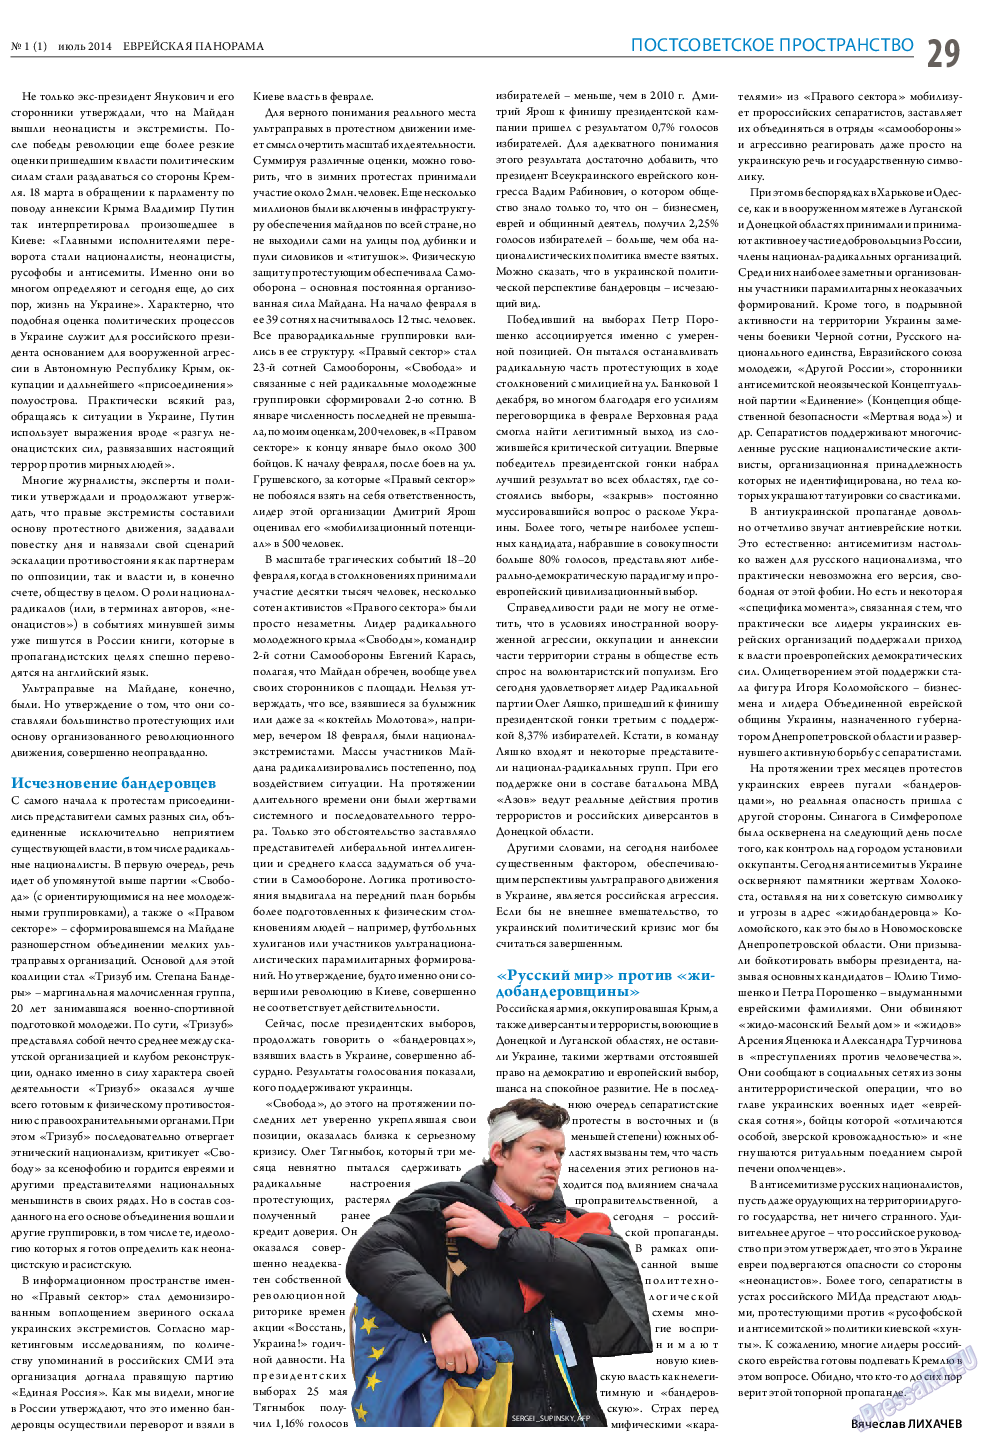 Еврейская панорама, газета. 2014 №1 стр.29